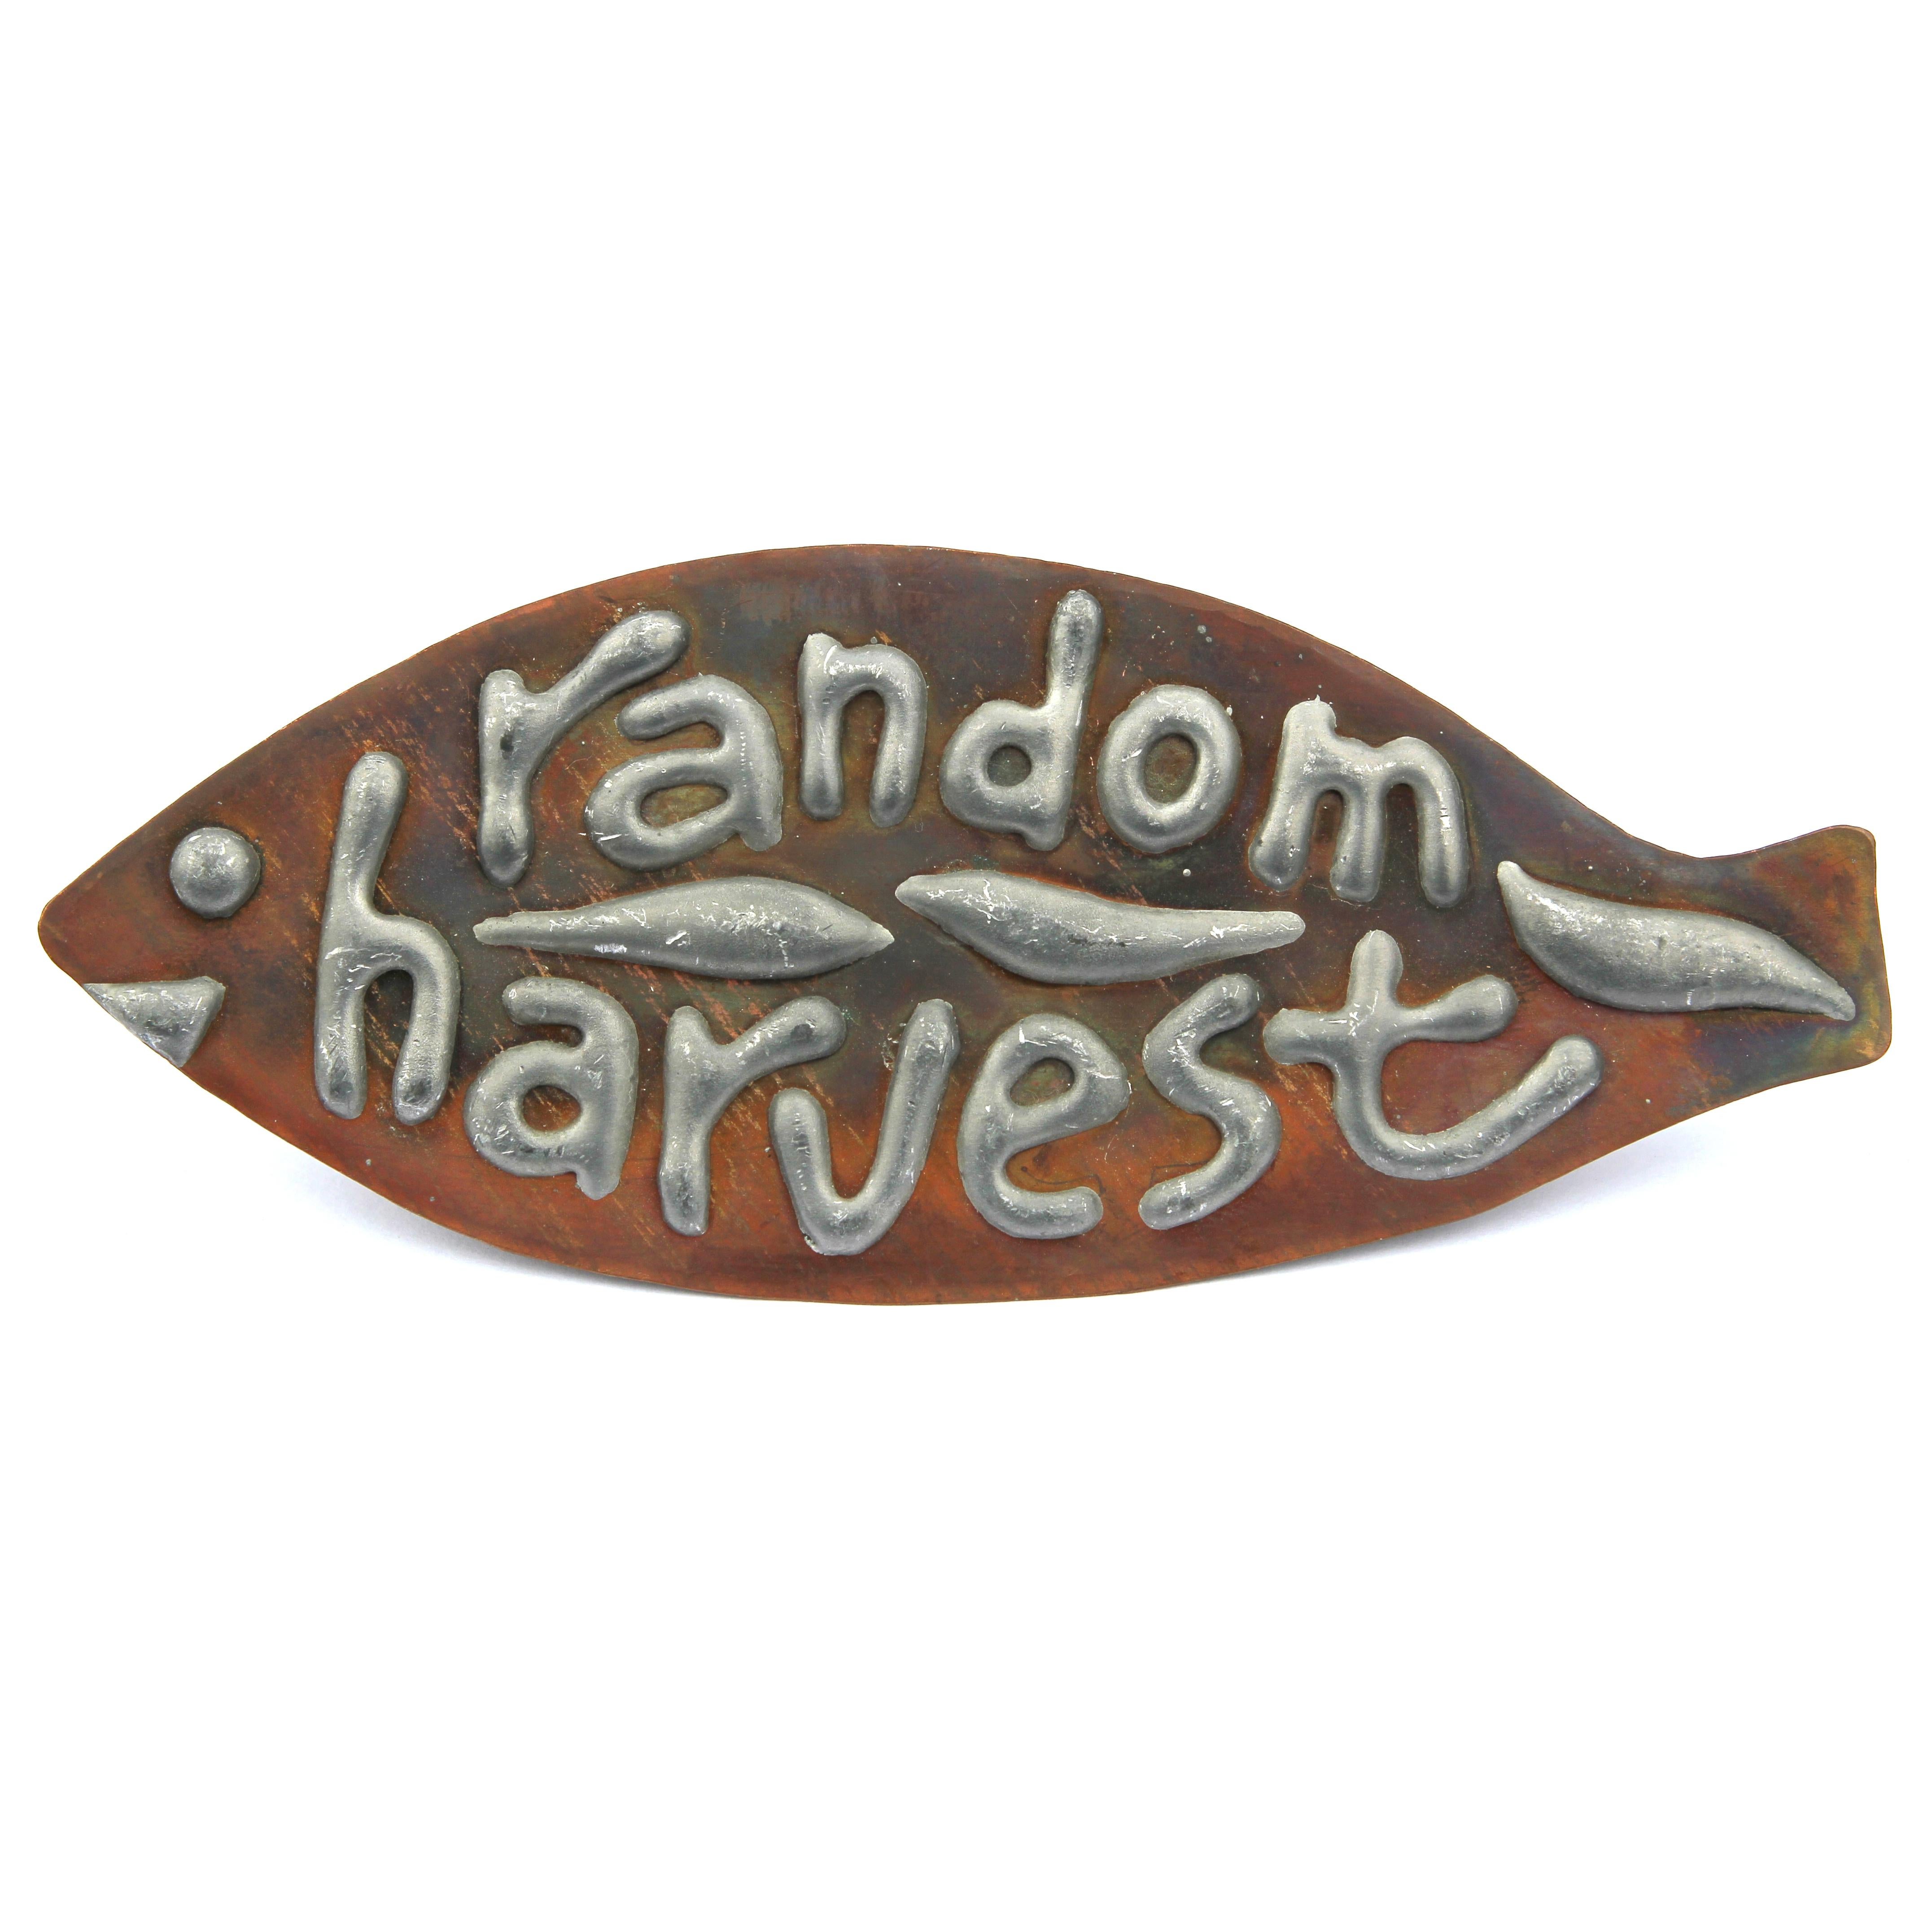 Frank Dolejska Abstract Sculpture - "Random Harvest" Modern Abstract Copper Metal Fish Word Art Wall Sculpture